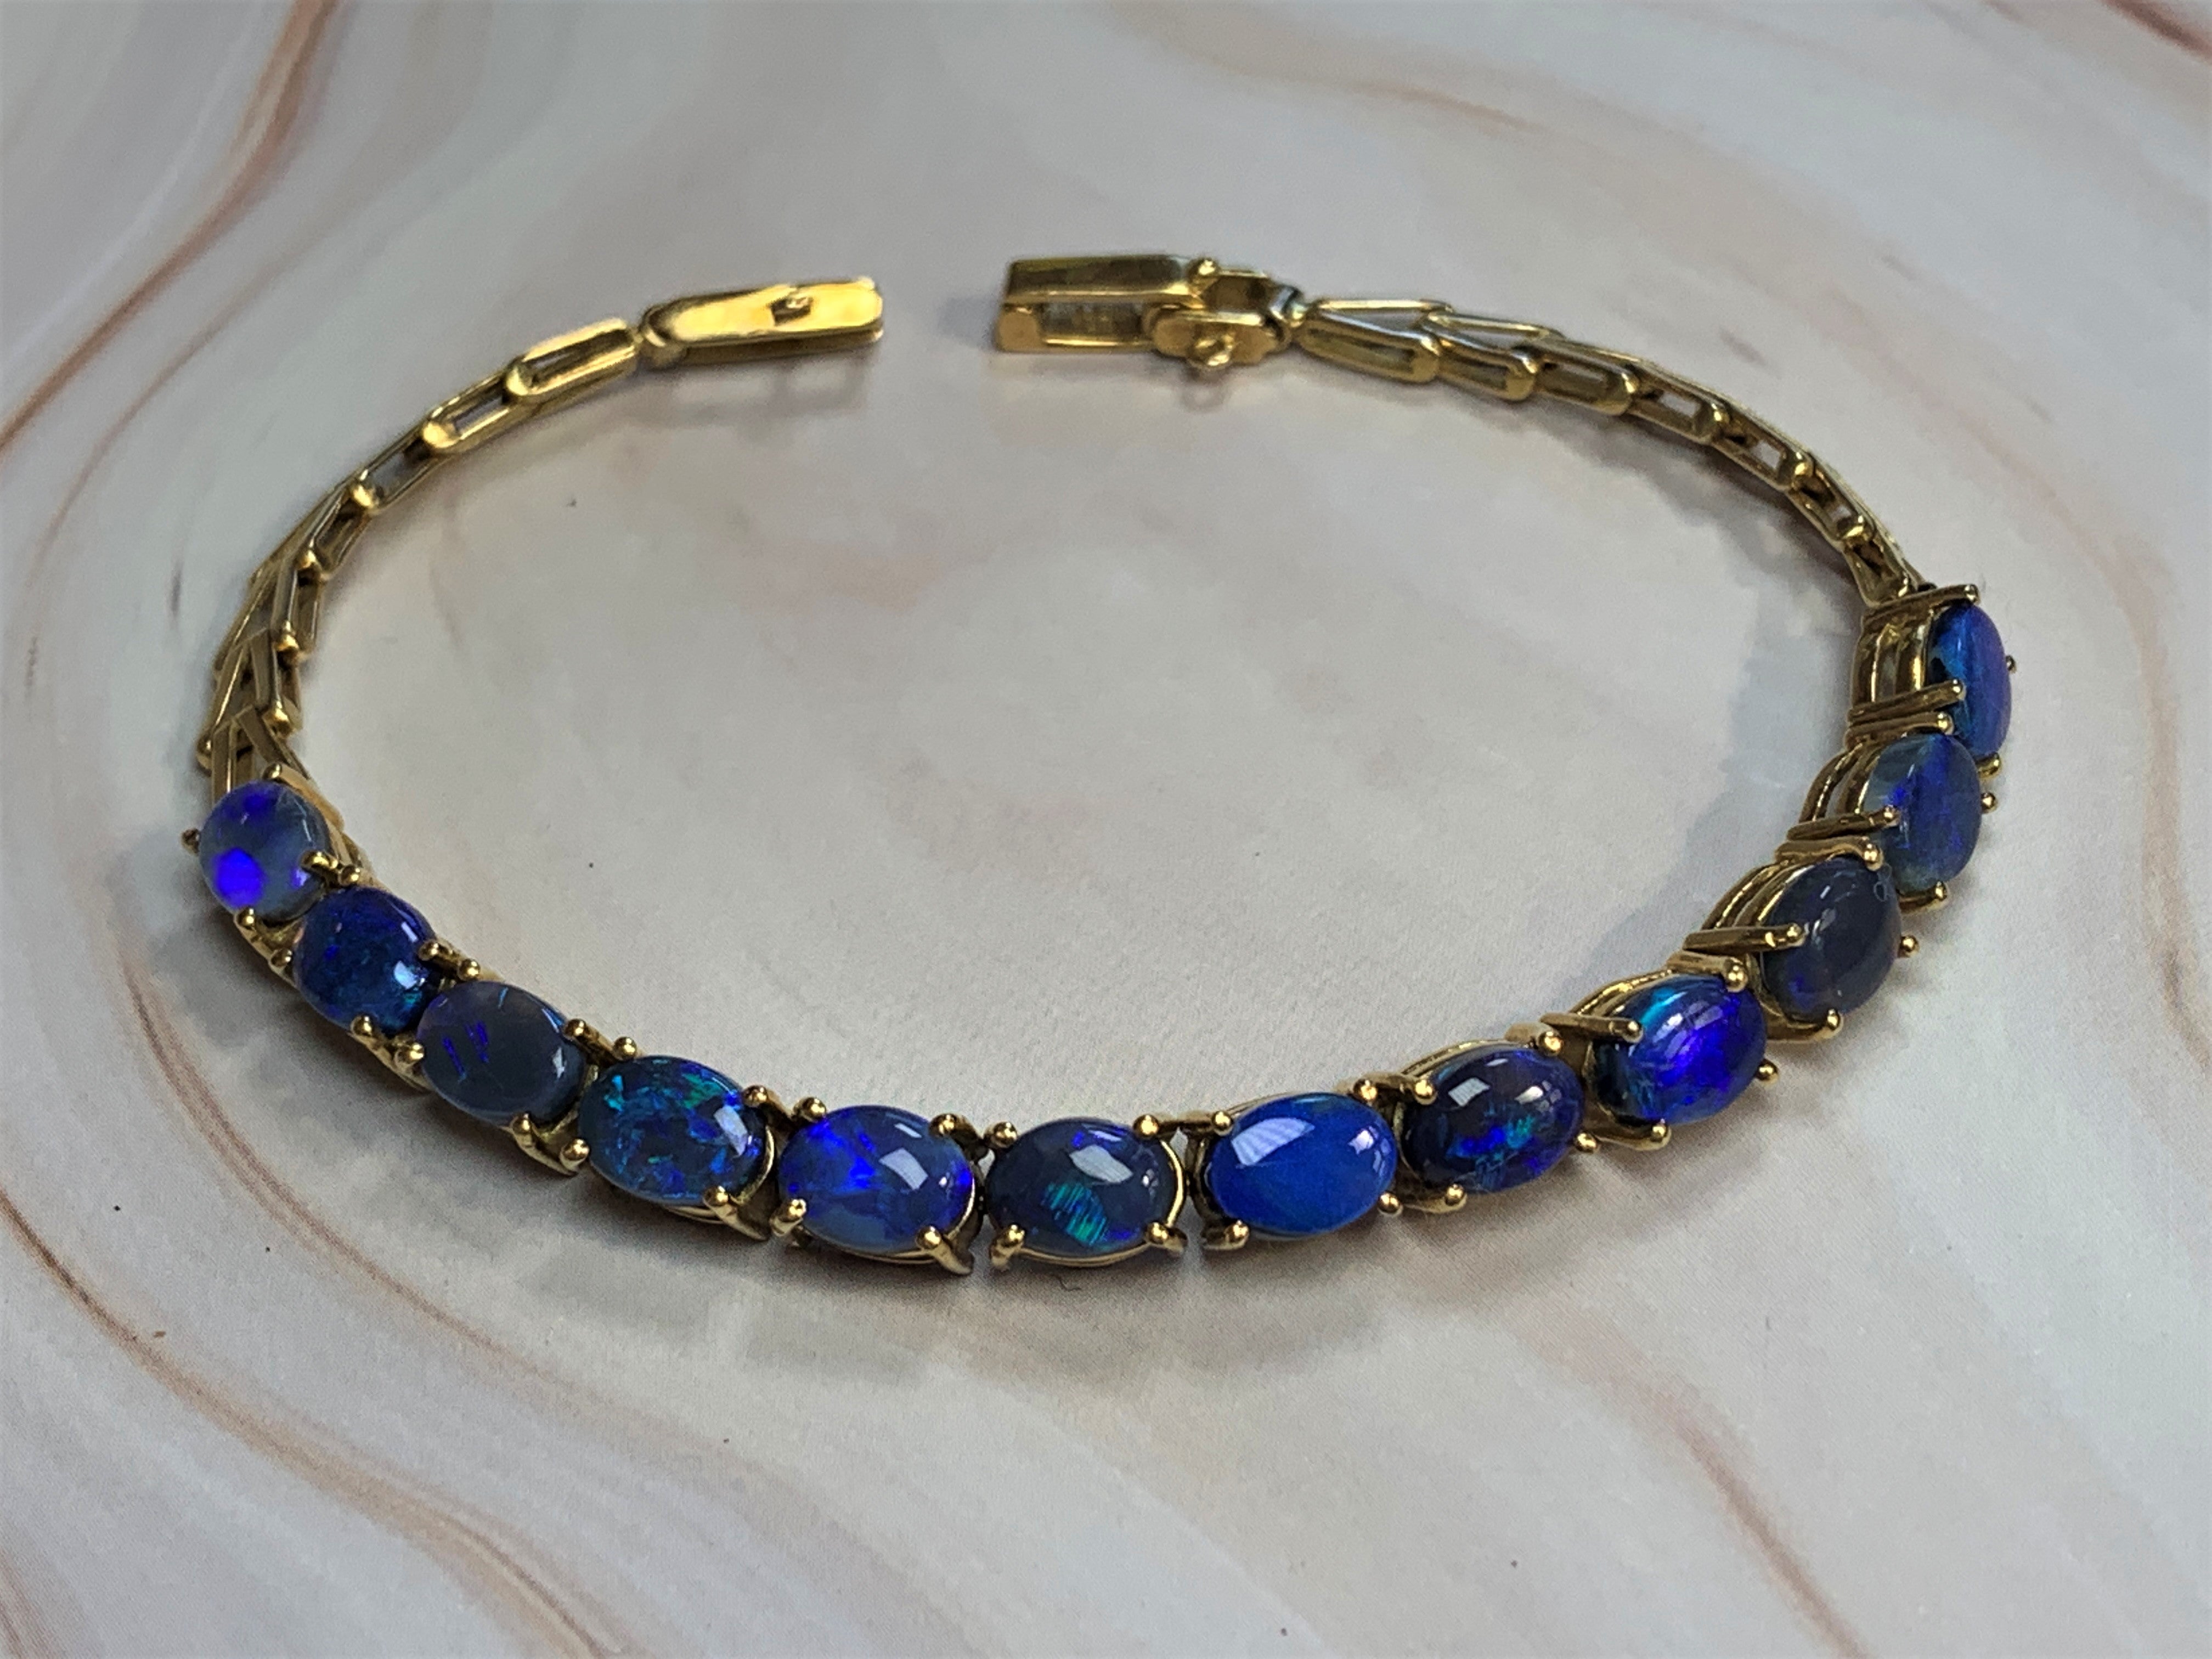 18kt Yellow Gold Black Opal 4.2ct bracelet - Masterpiece Jewellery Opal & Gems Sydney Australia | Online Shop